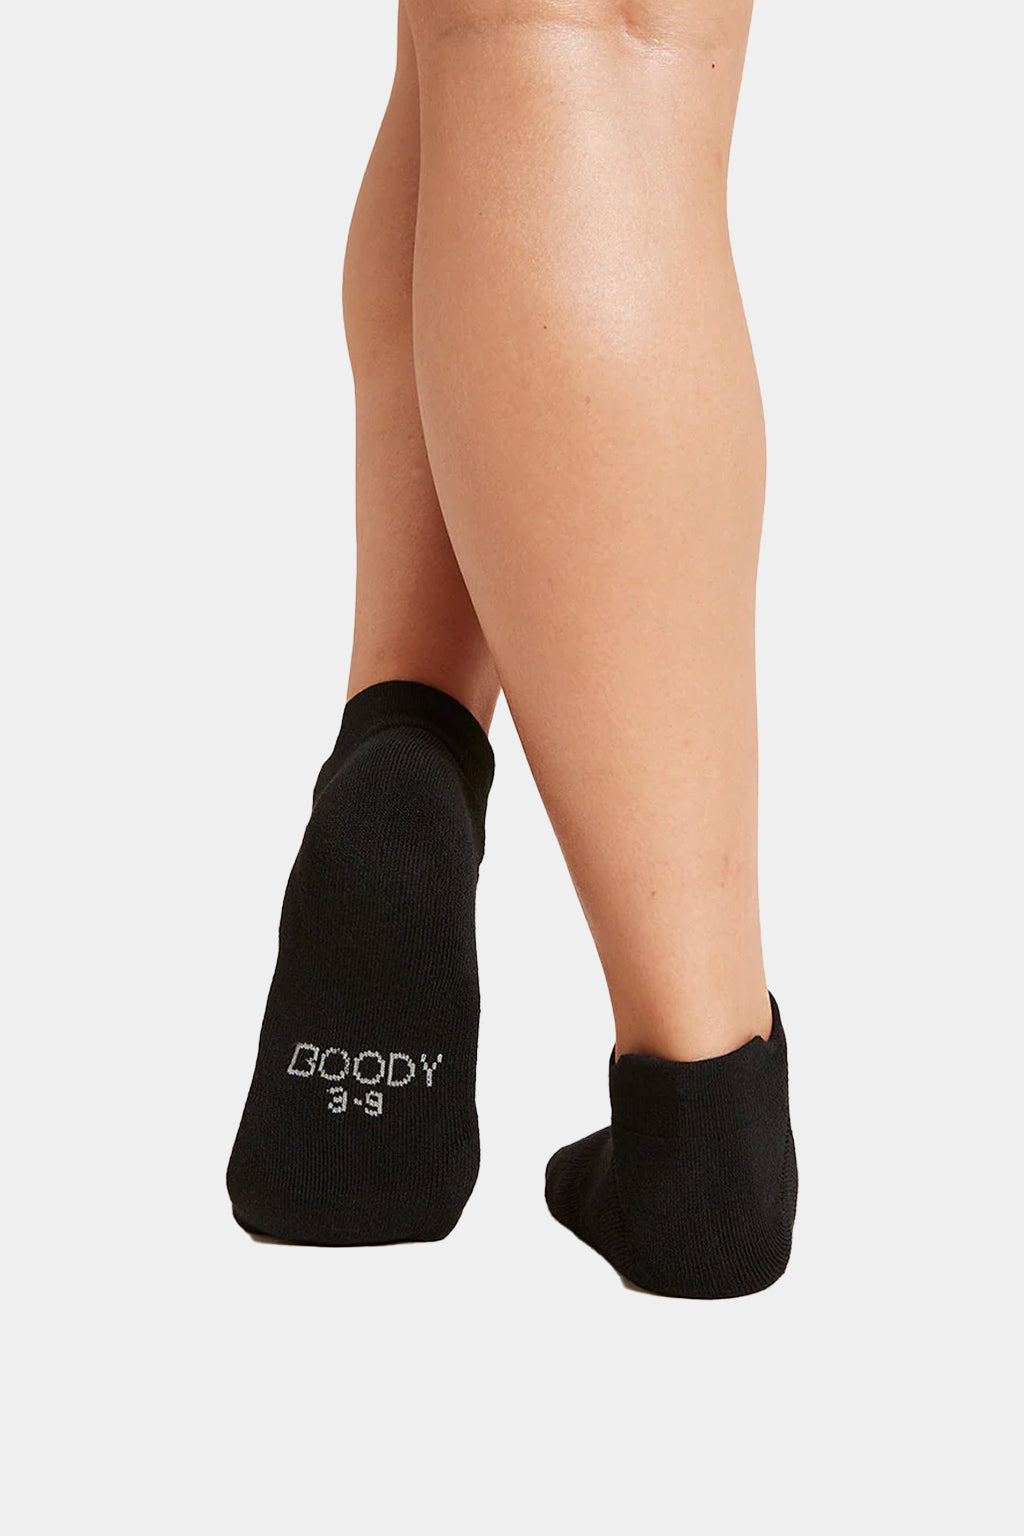 Boody - Women's Low Cut Sneaker Socks (Pairs of Three)